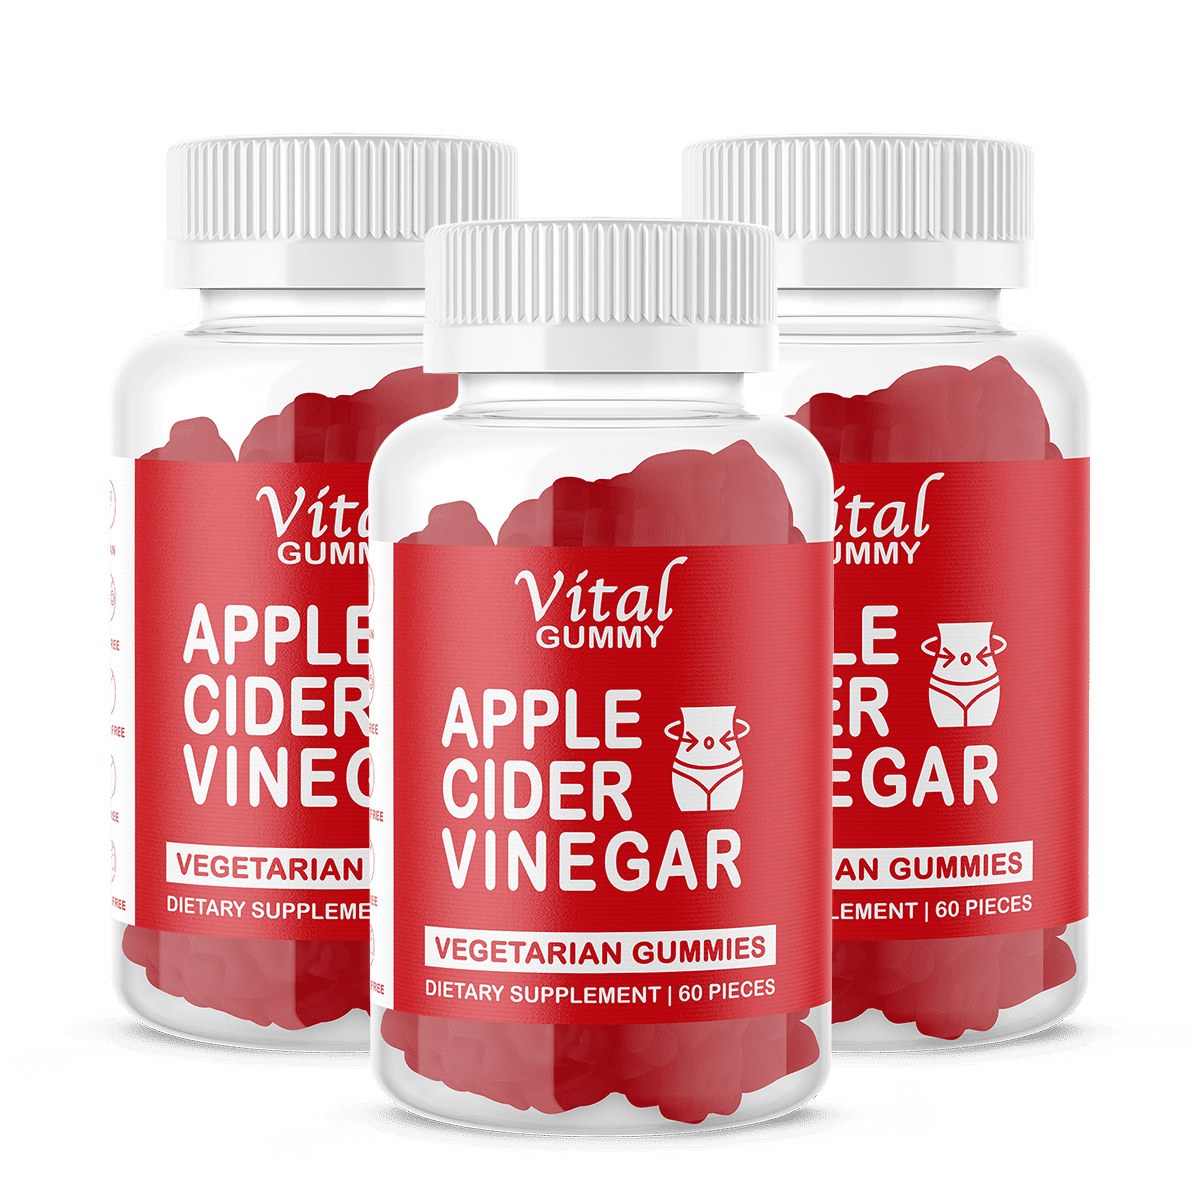 apple cider vinegar vital gummy